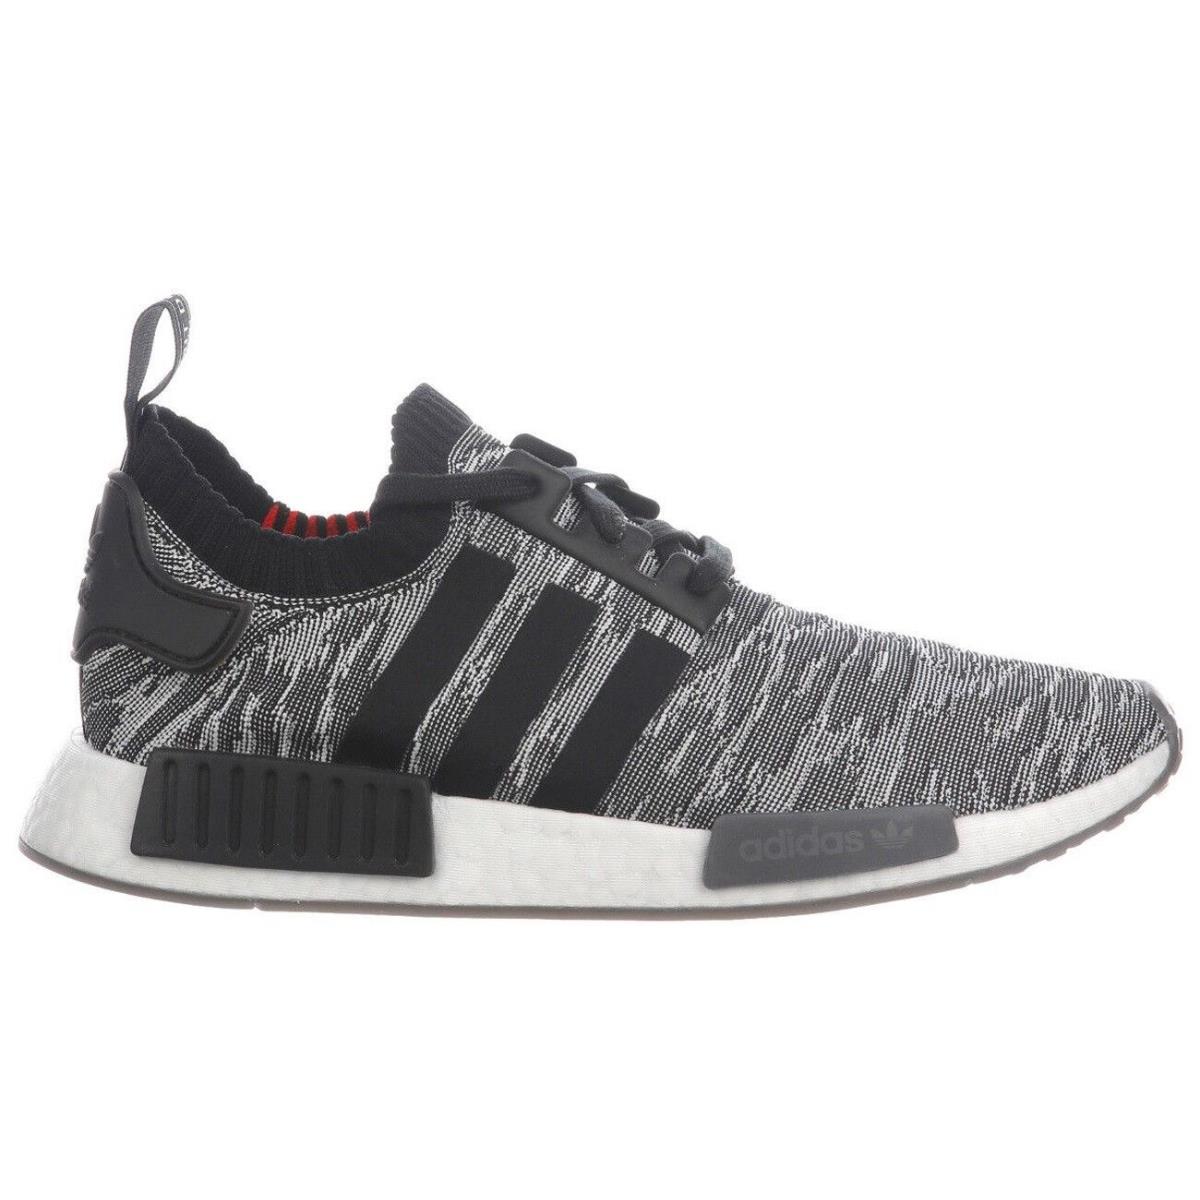 Adidas Nmd R1 Primeknit CQ2444 Men`s Grey Running Shoes - Gray / Core Black